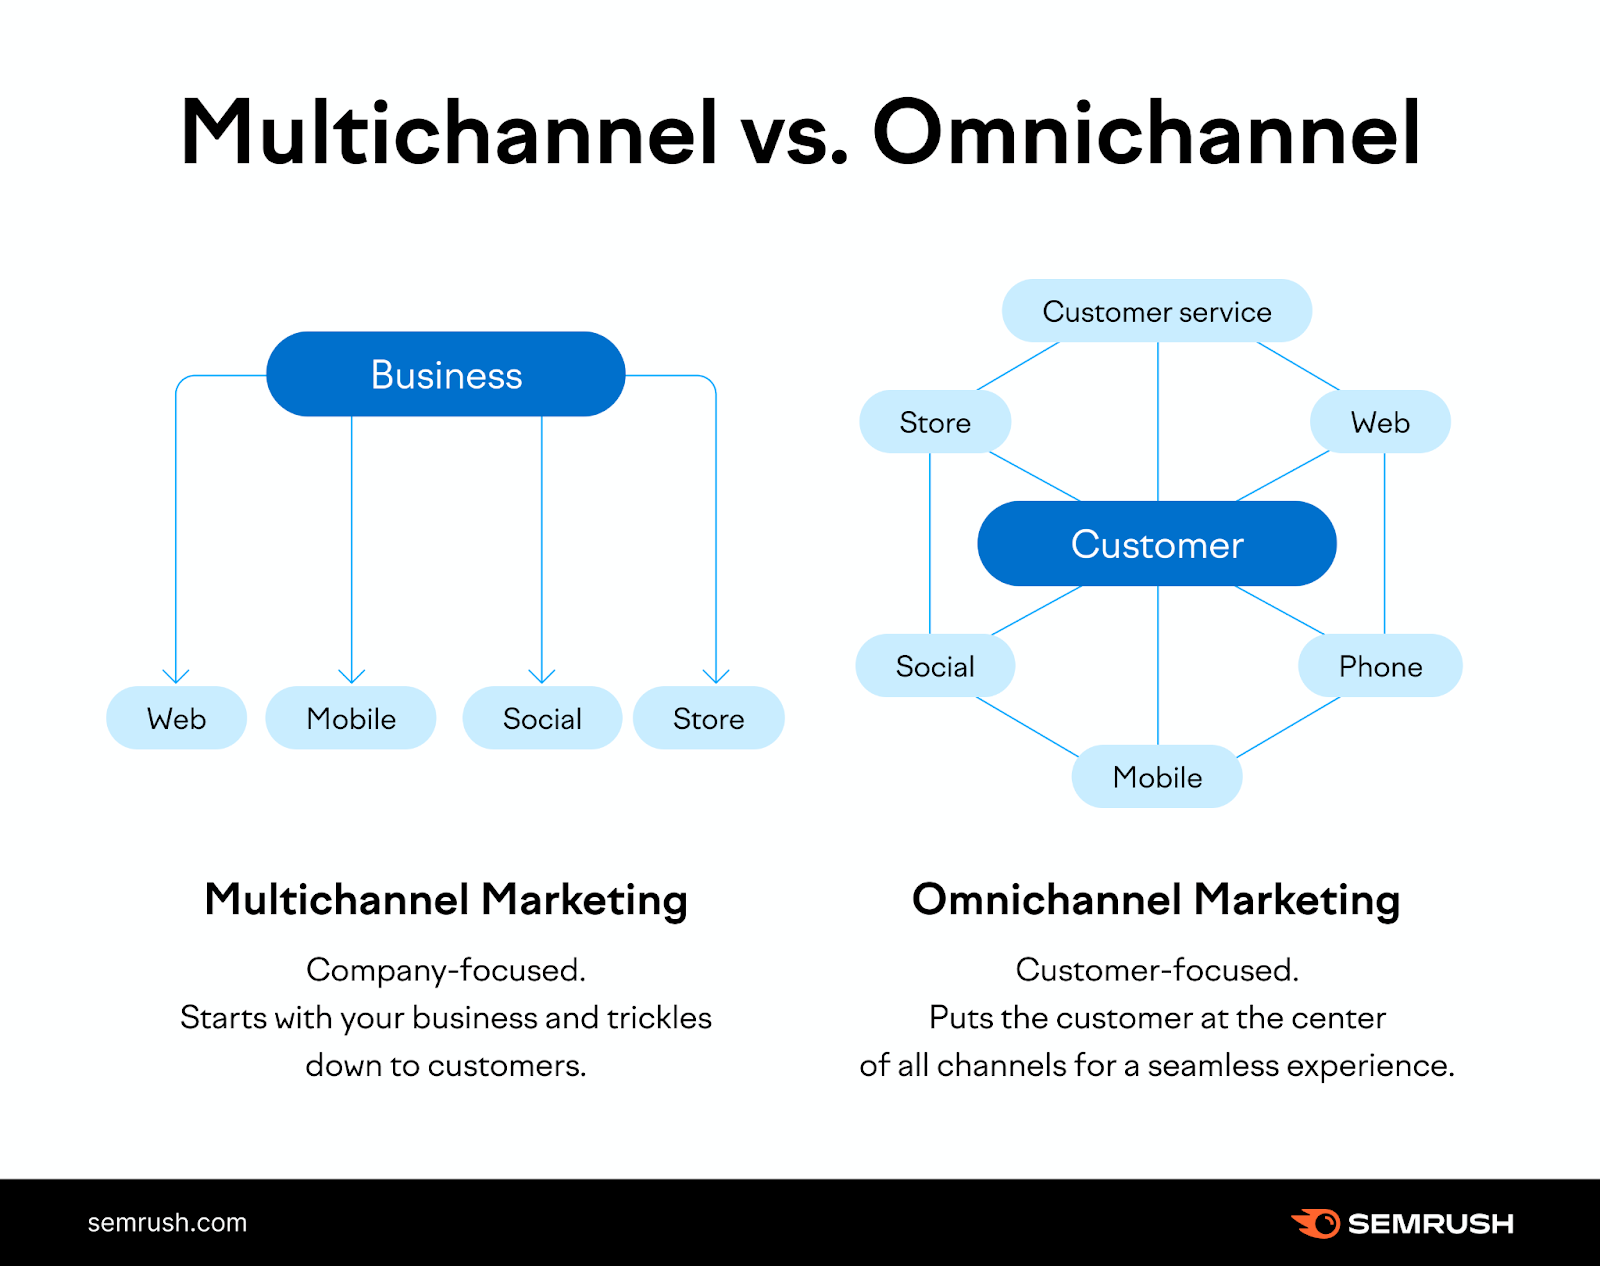 Multichannel vs. Omnichannel Marketing infographic